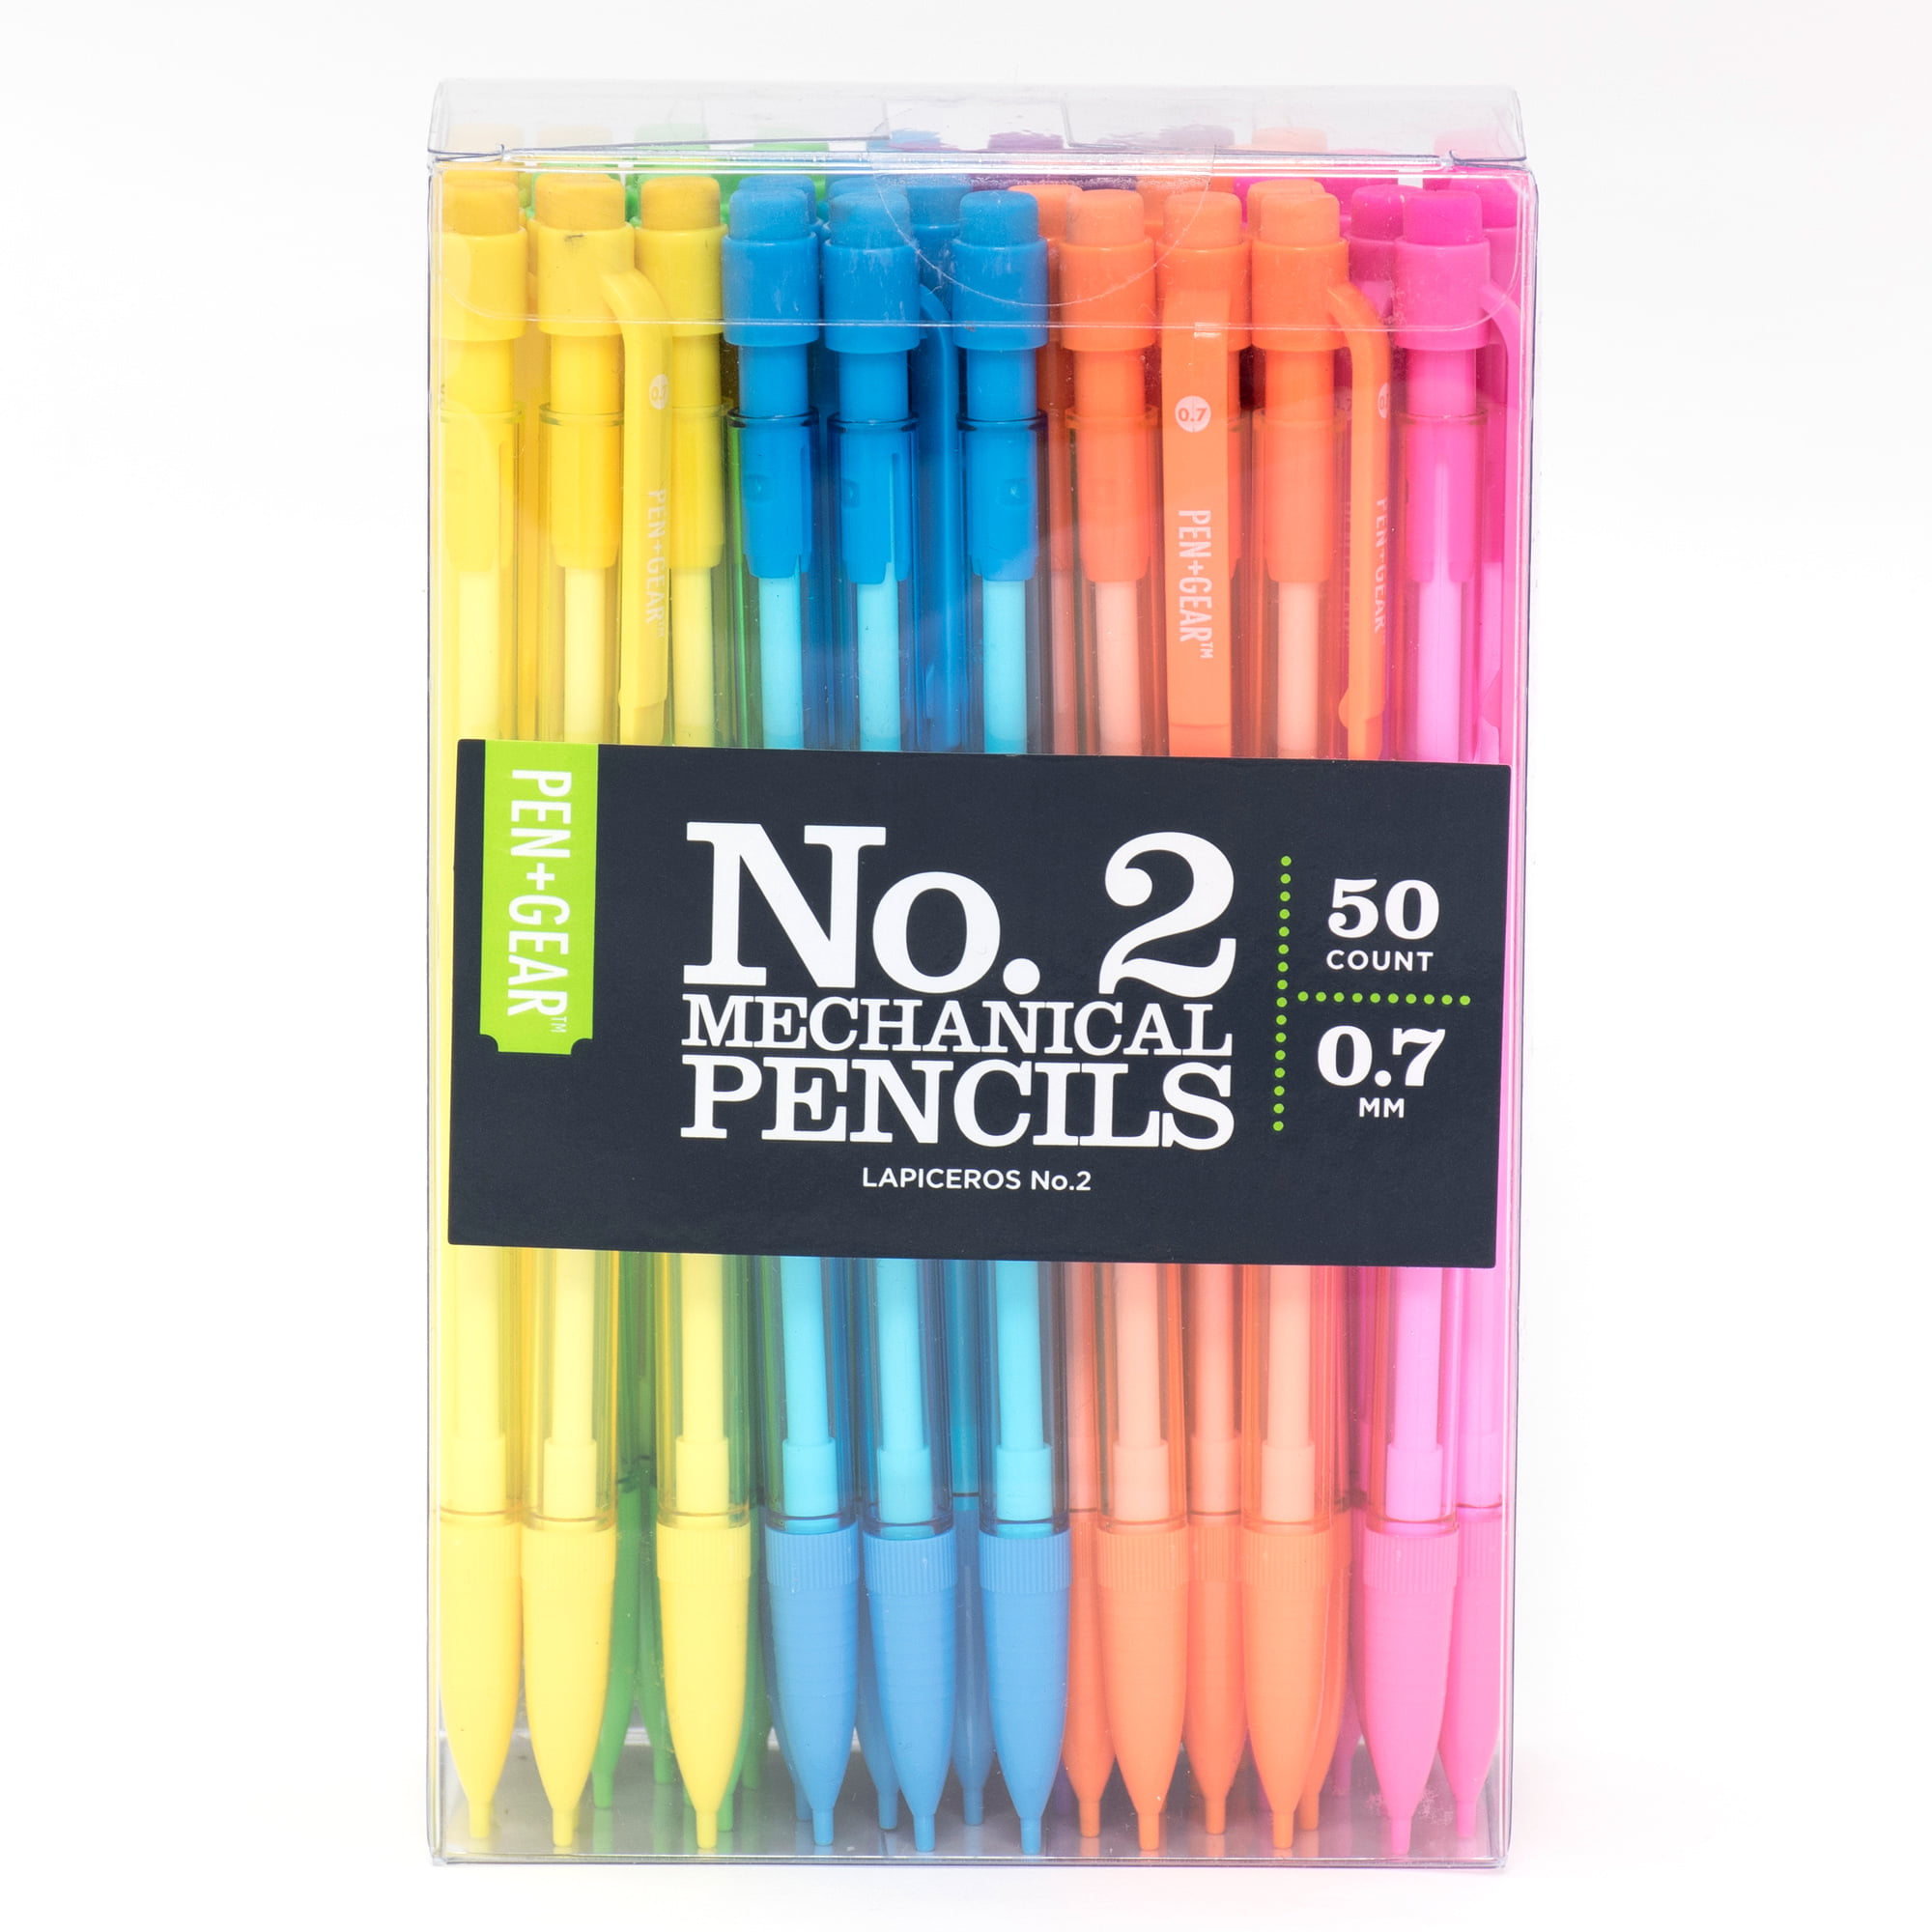 1x Fashion Plastic Automatic Mechanical Pencil Pen Stationary School V4Z8 